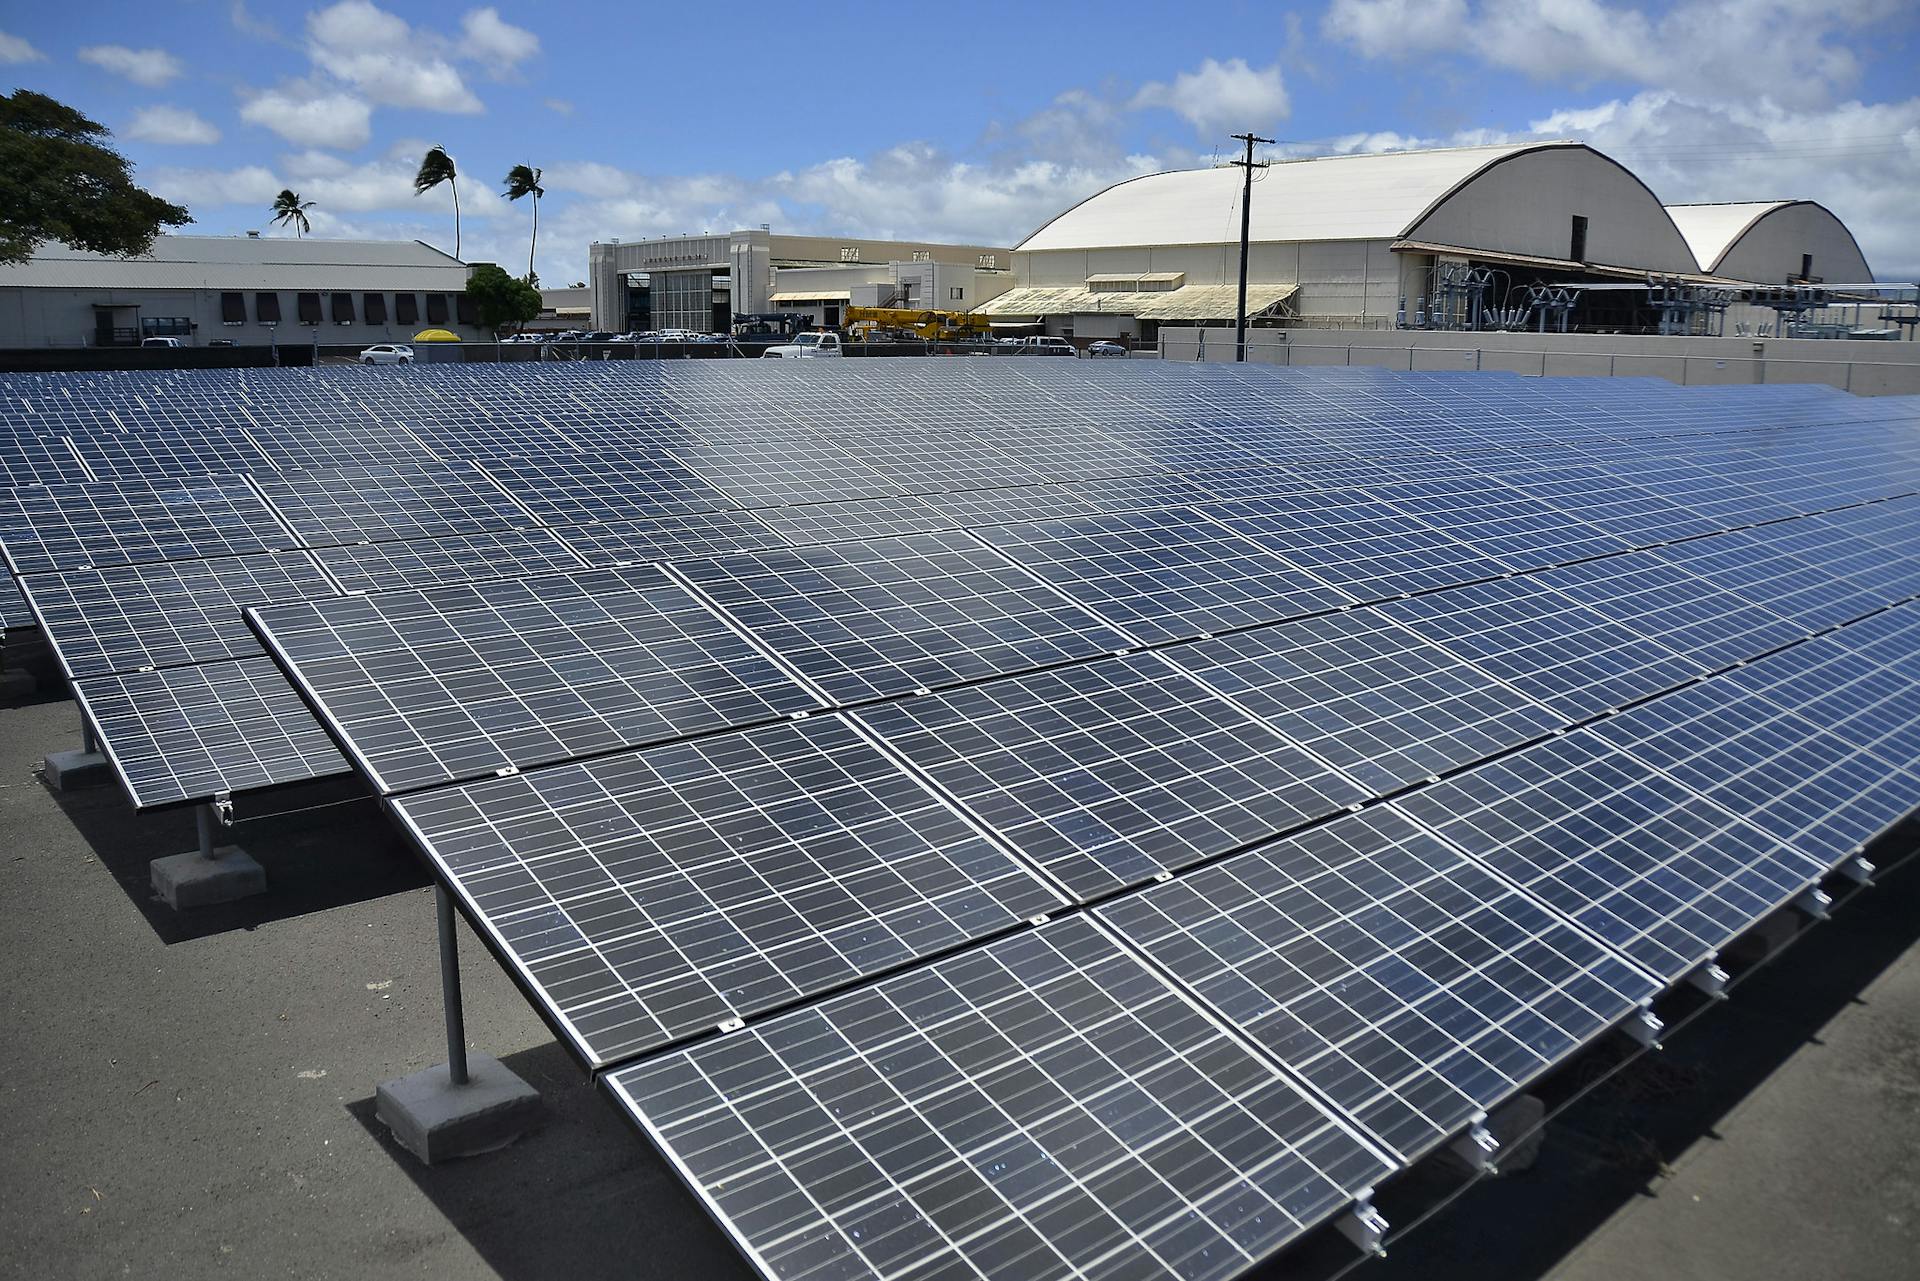 Solar panels outside a military airplane hangar.